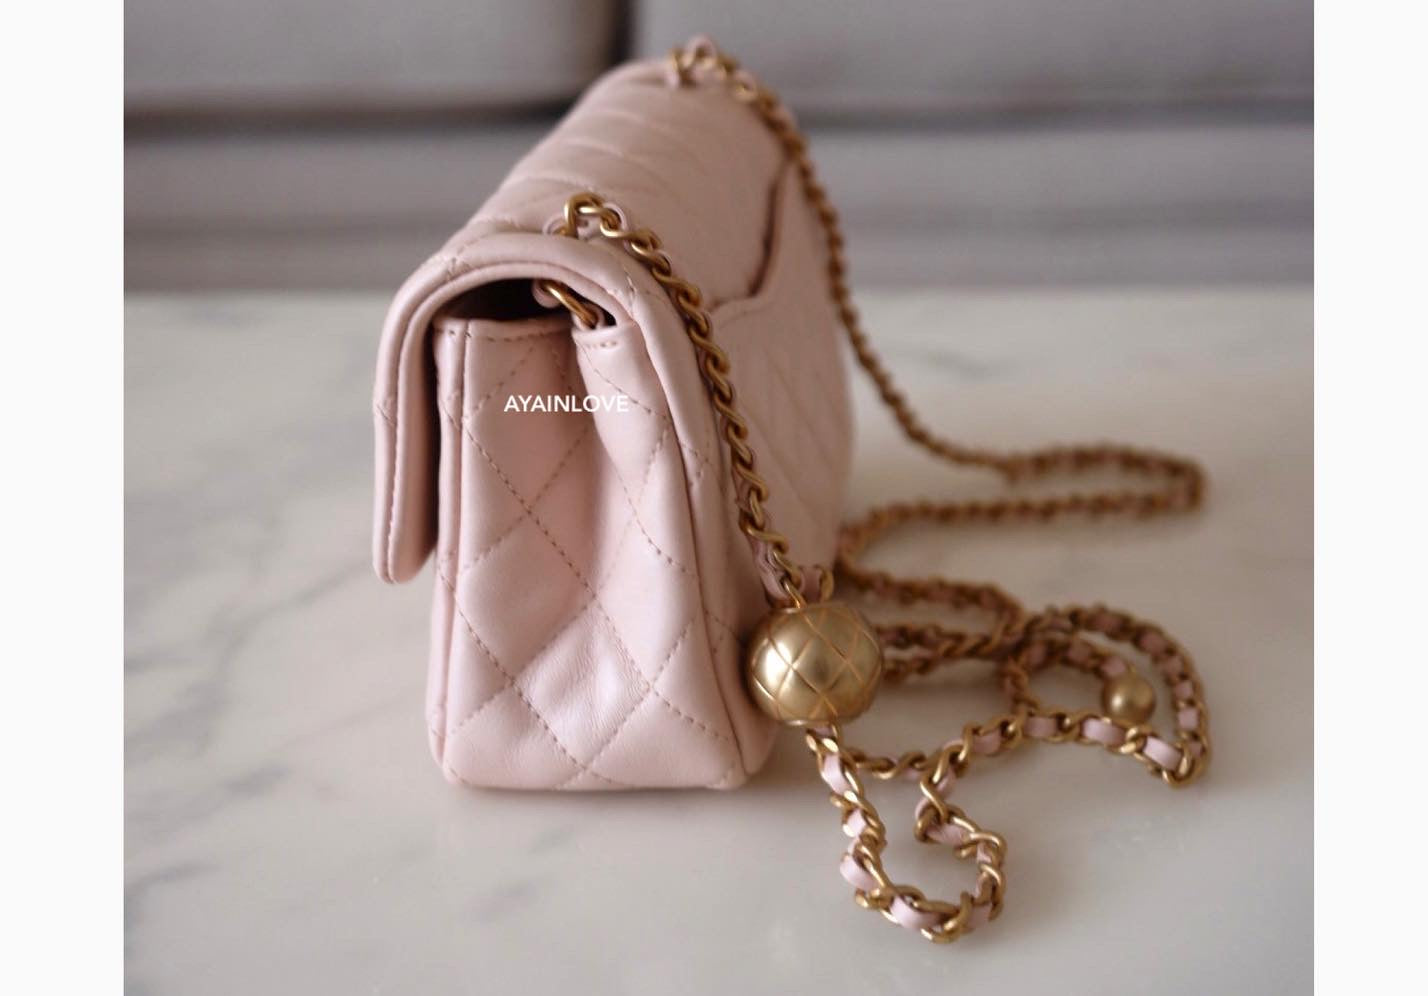 Chanel Mini Rectangular Flap Bag With Top Handle Chain Light Purple